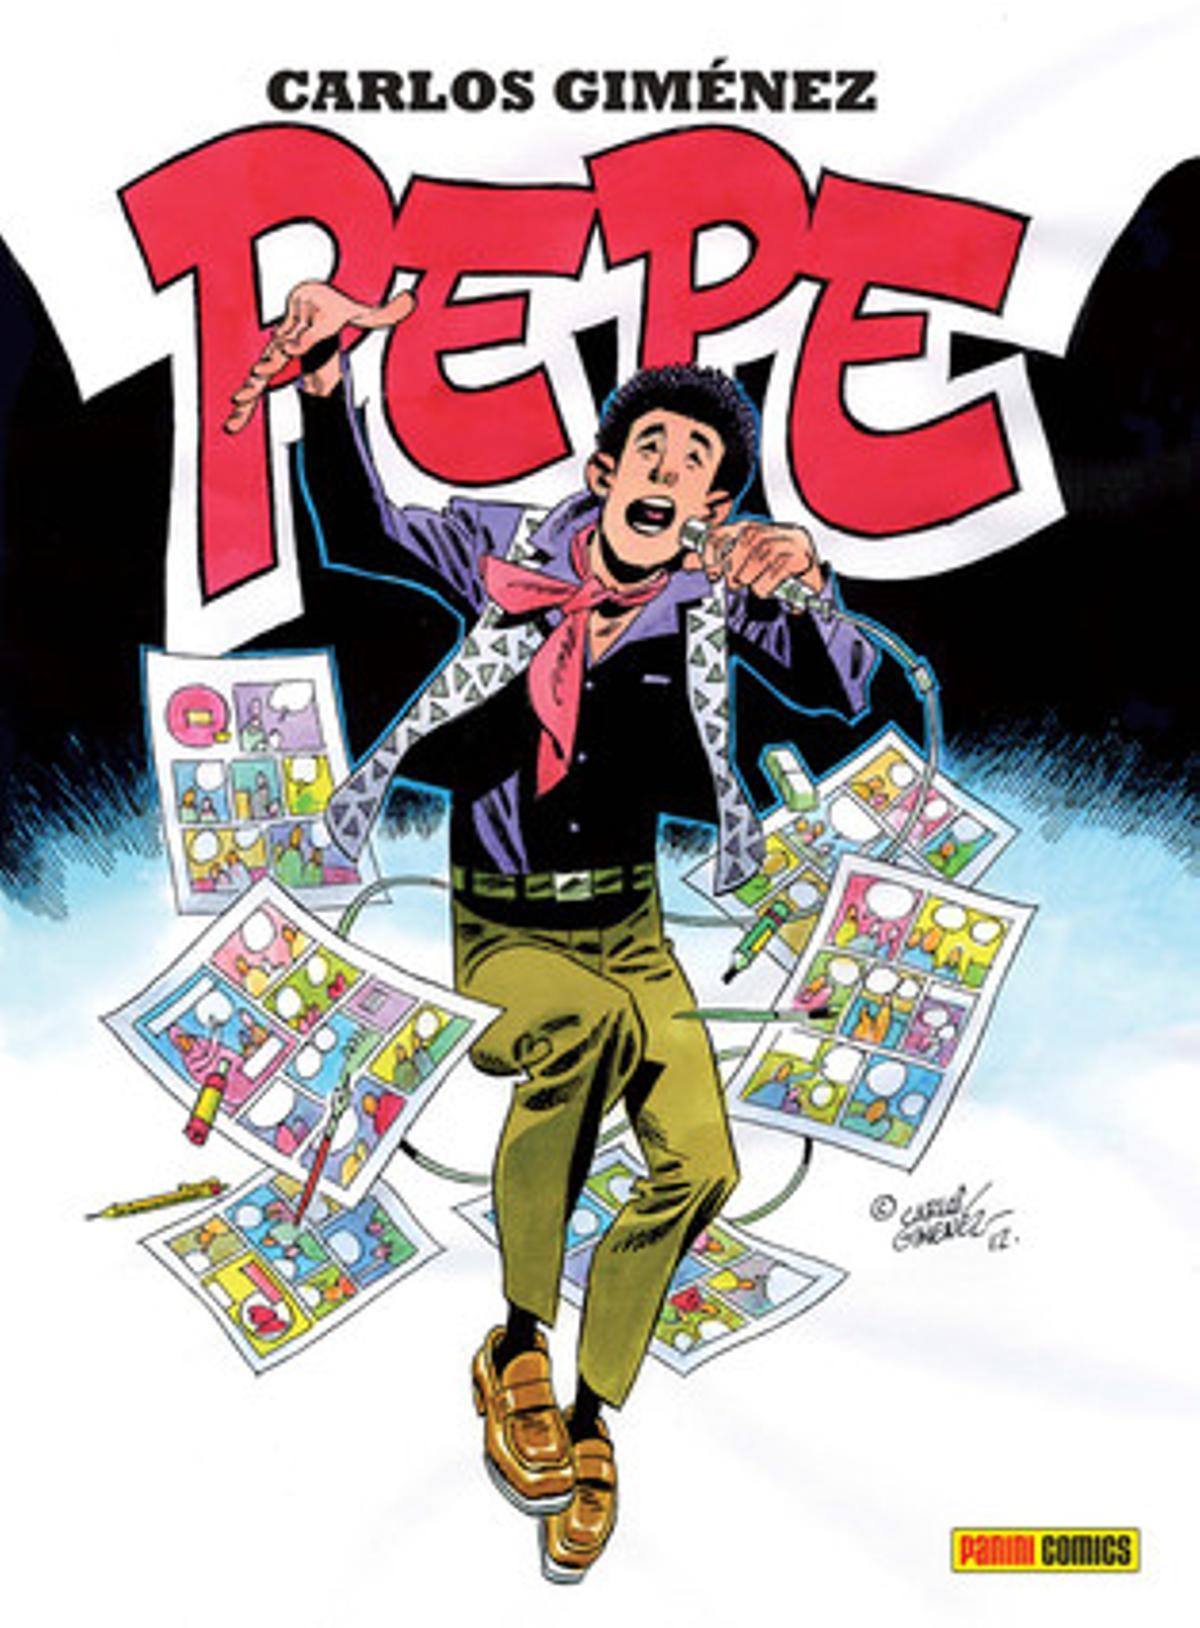 Portada del cómic ’Pepe’, de Carlos Giménez.